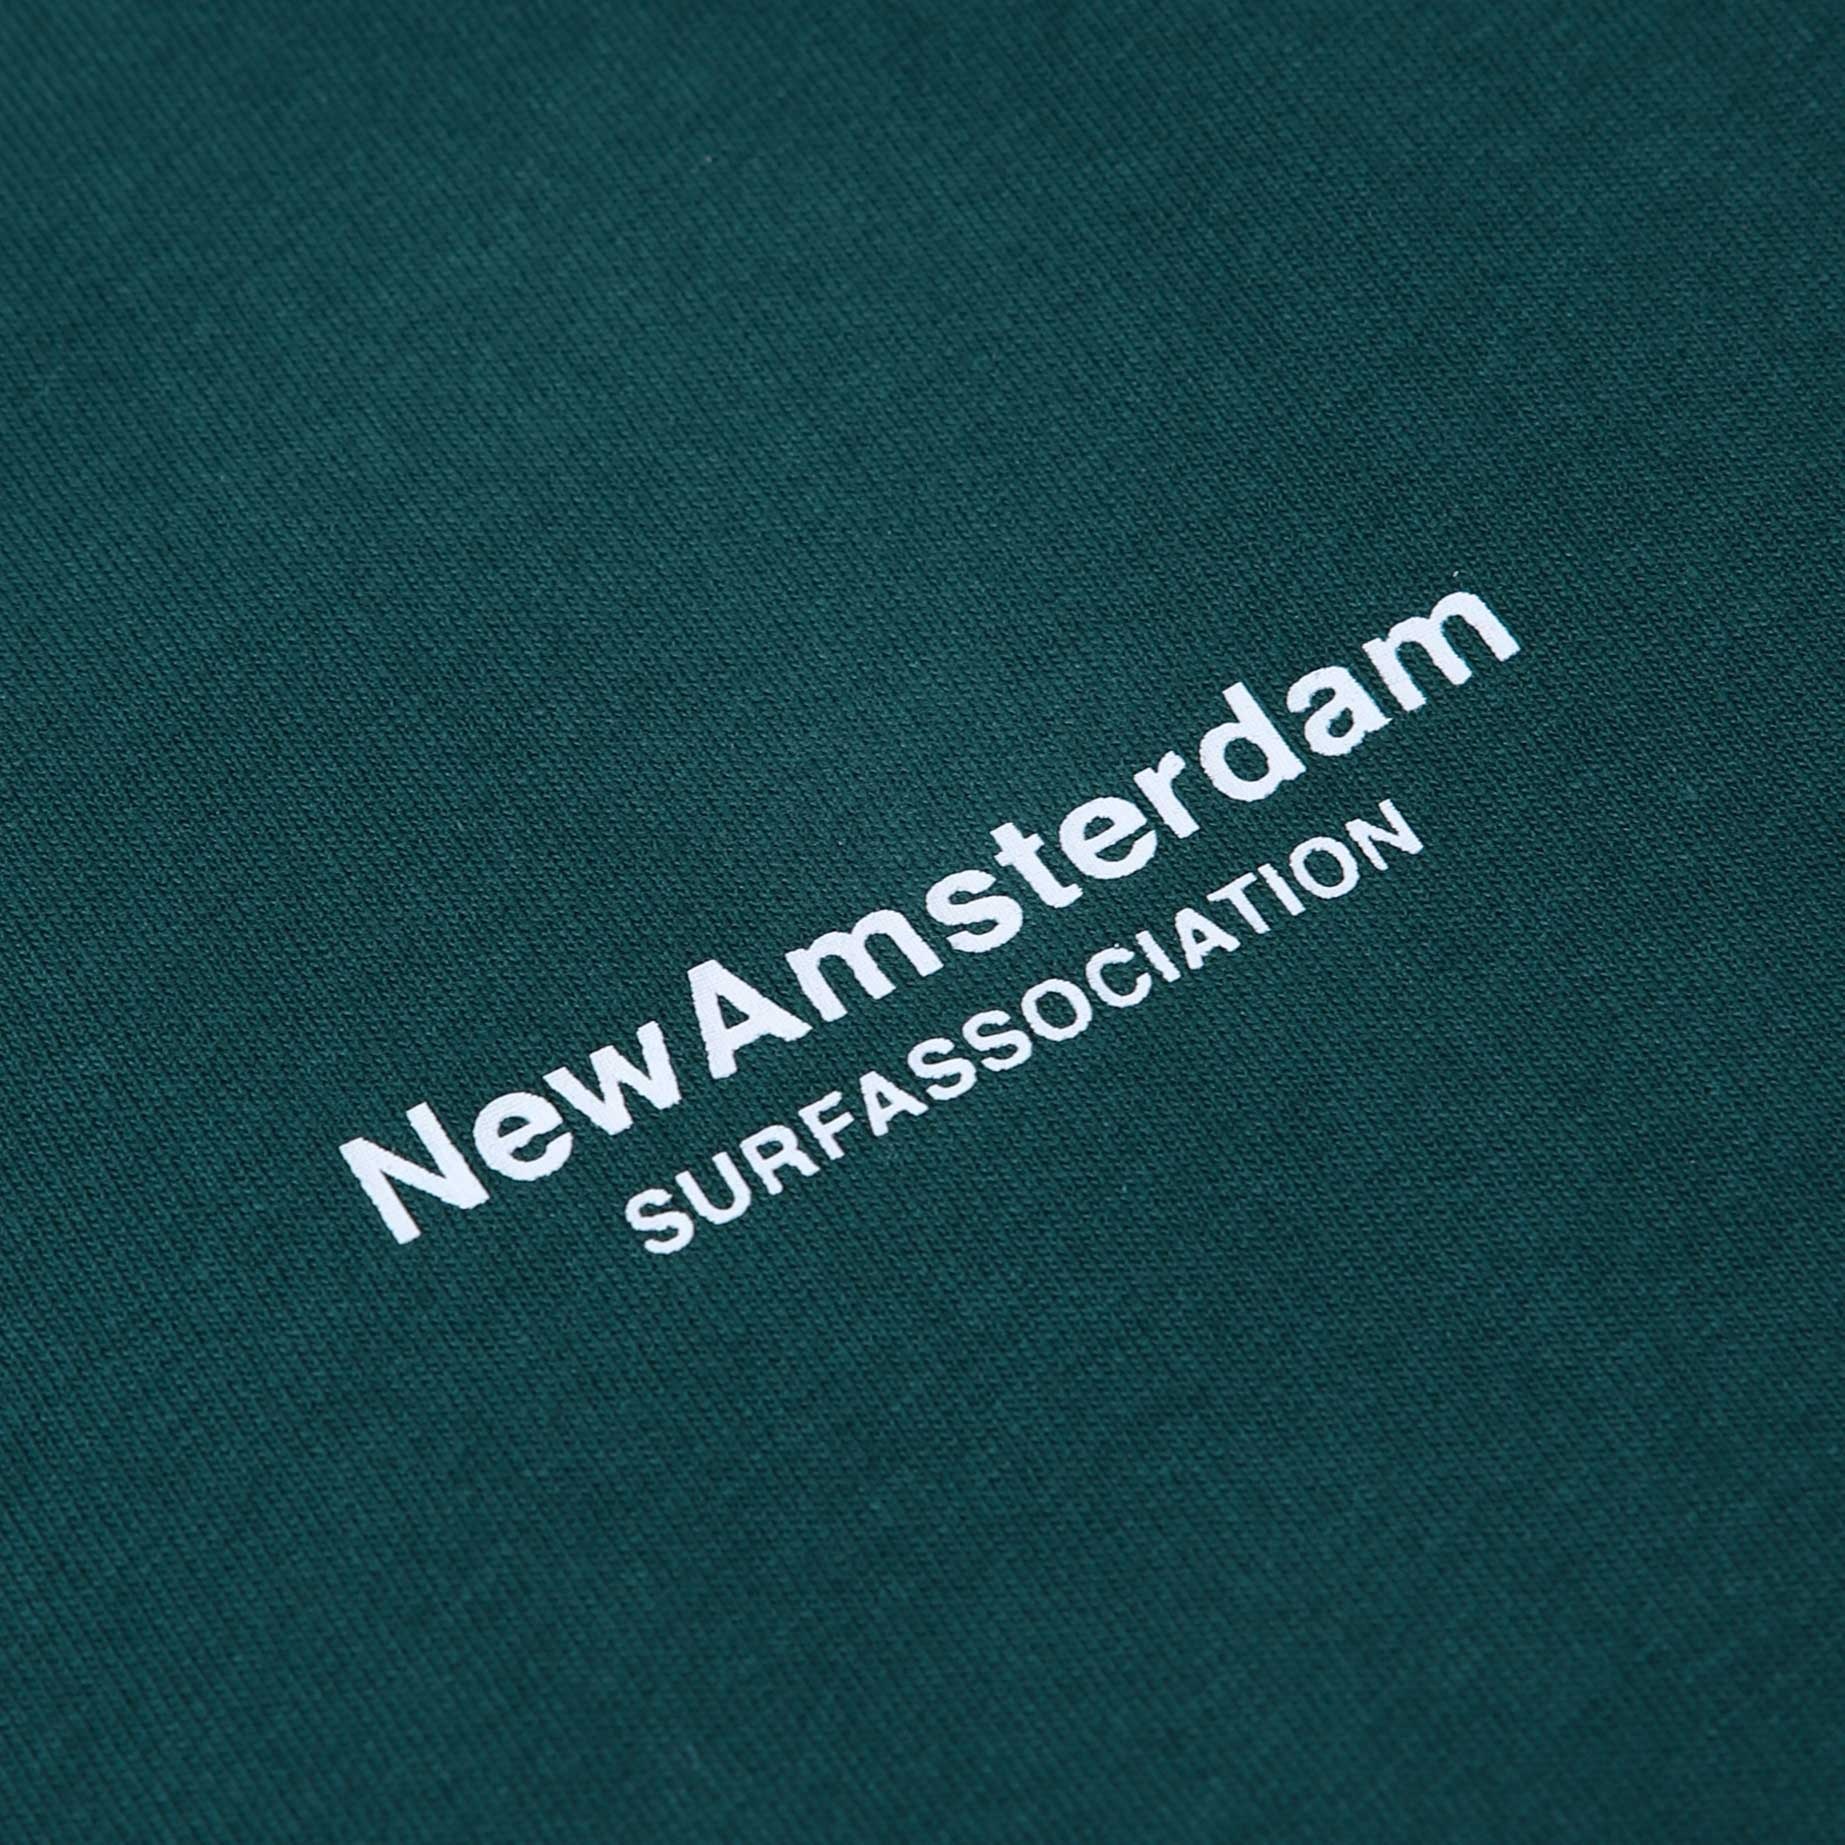 NAME TEE GREEN - New Amsterdam Surf Association